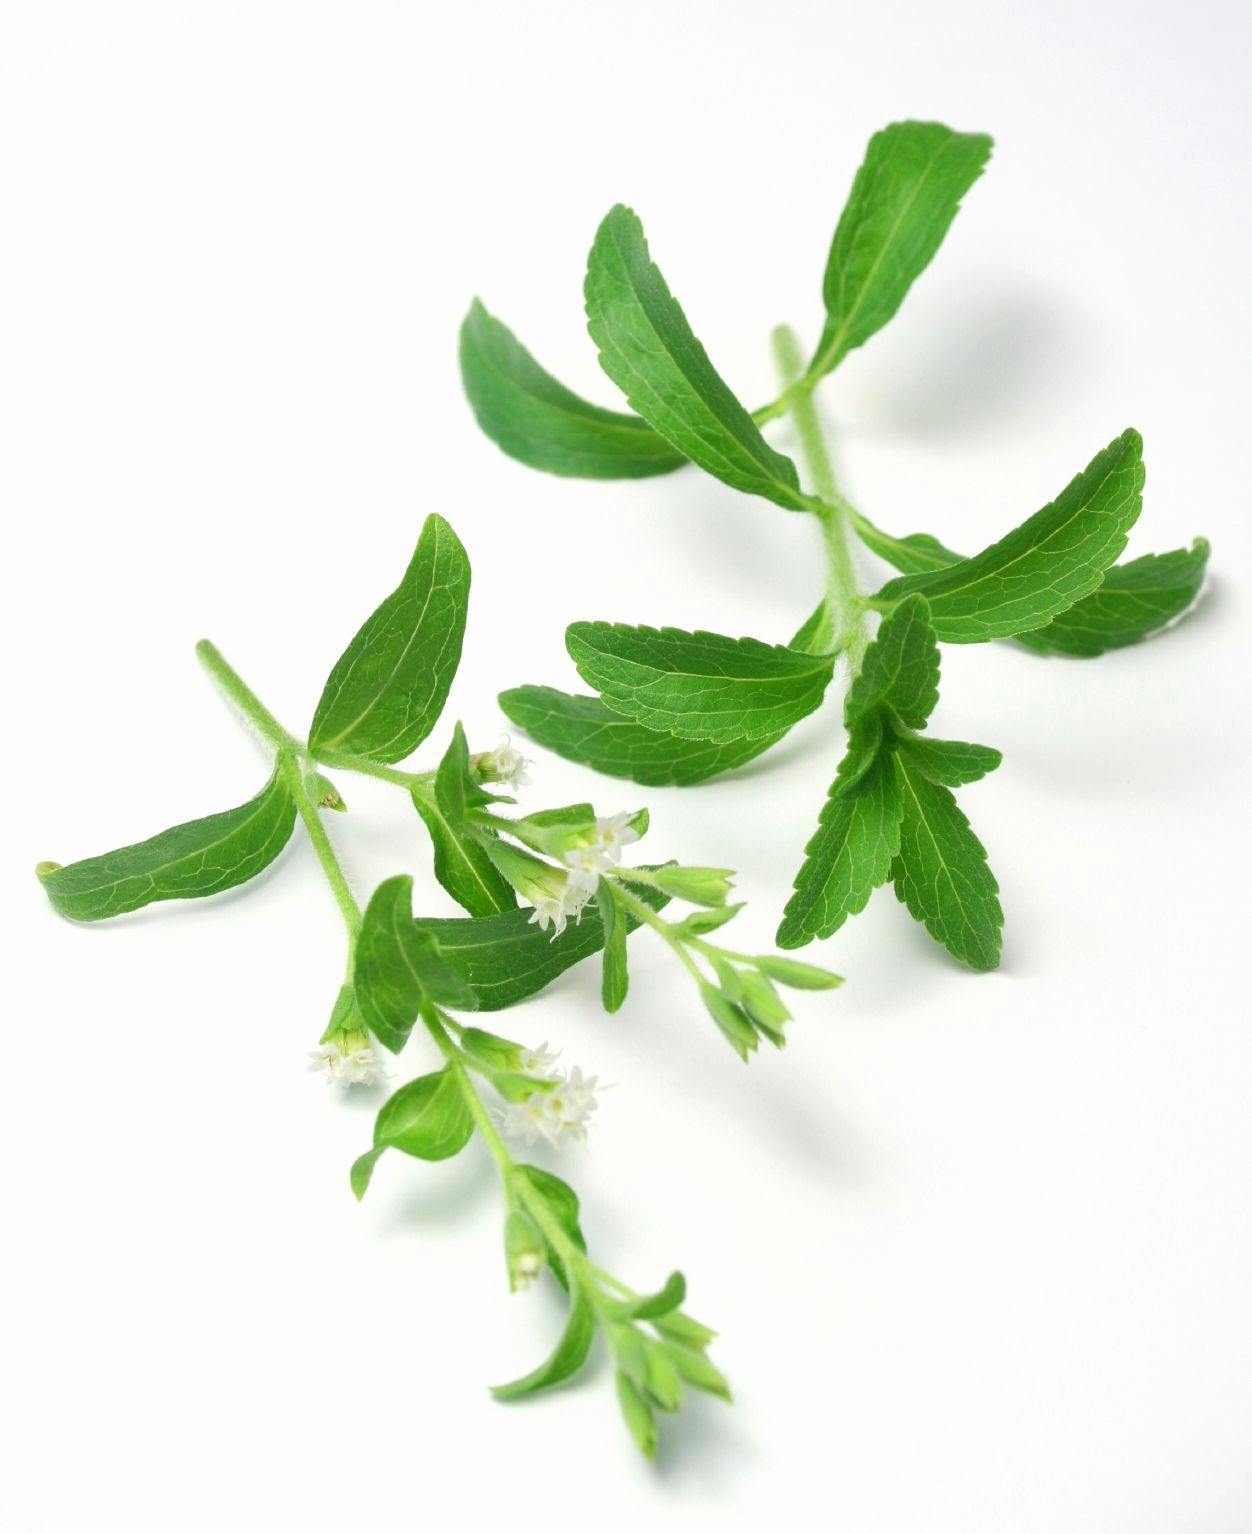 Nascent Health’s SoPure stevia gets “no questions” GRAS response from FDA